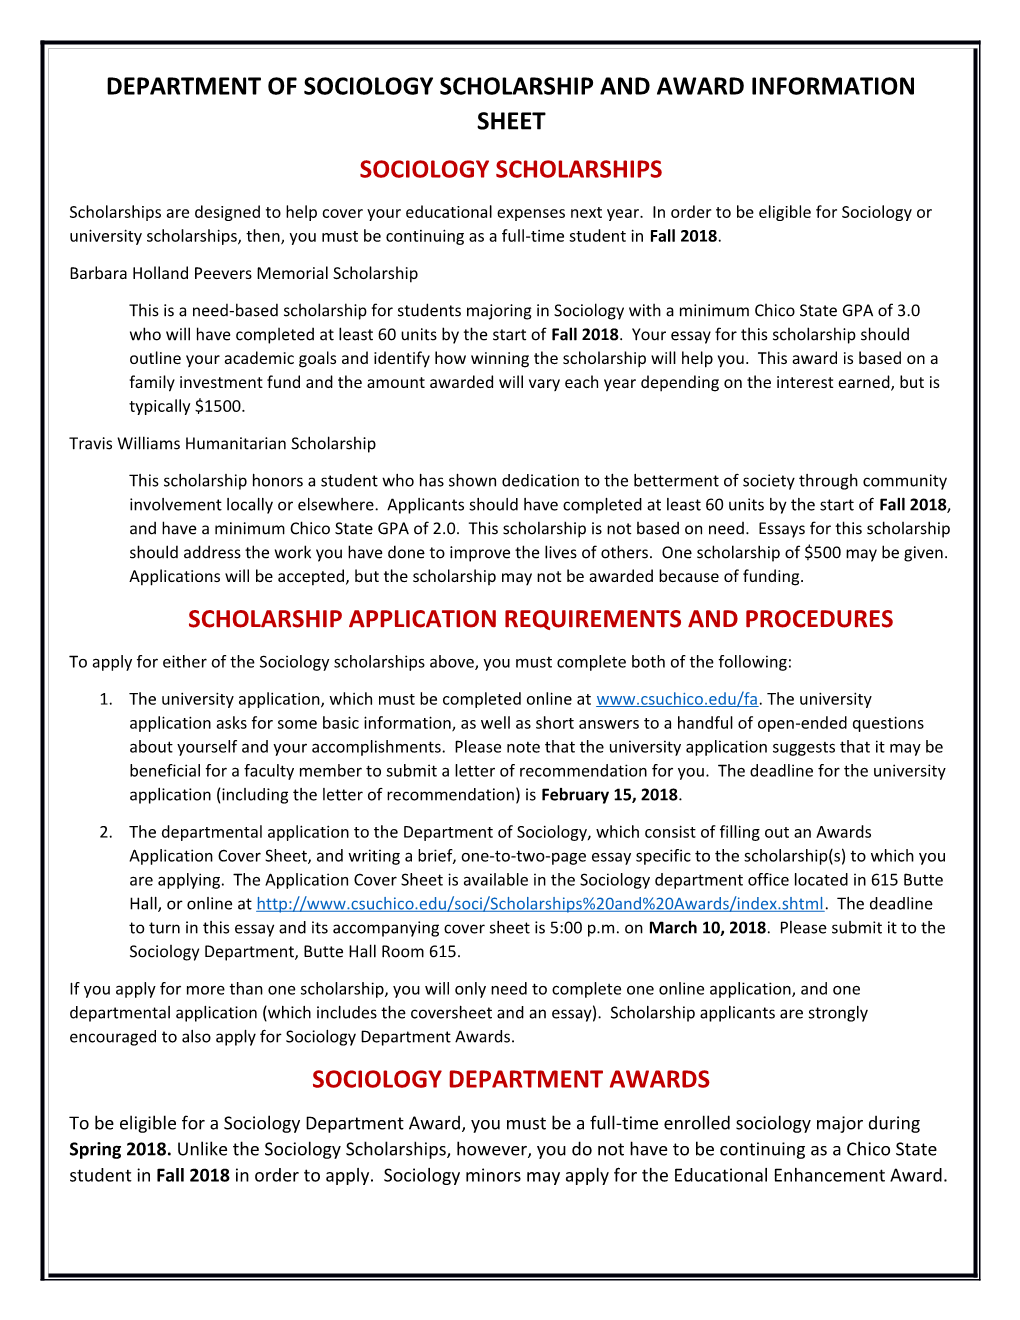 Department of Sociology Scholarship and Award Information Sheet